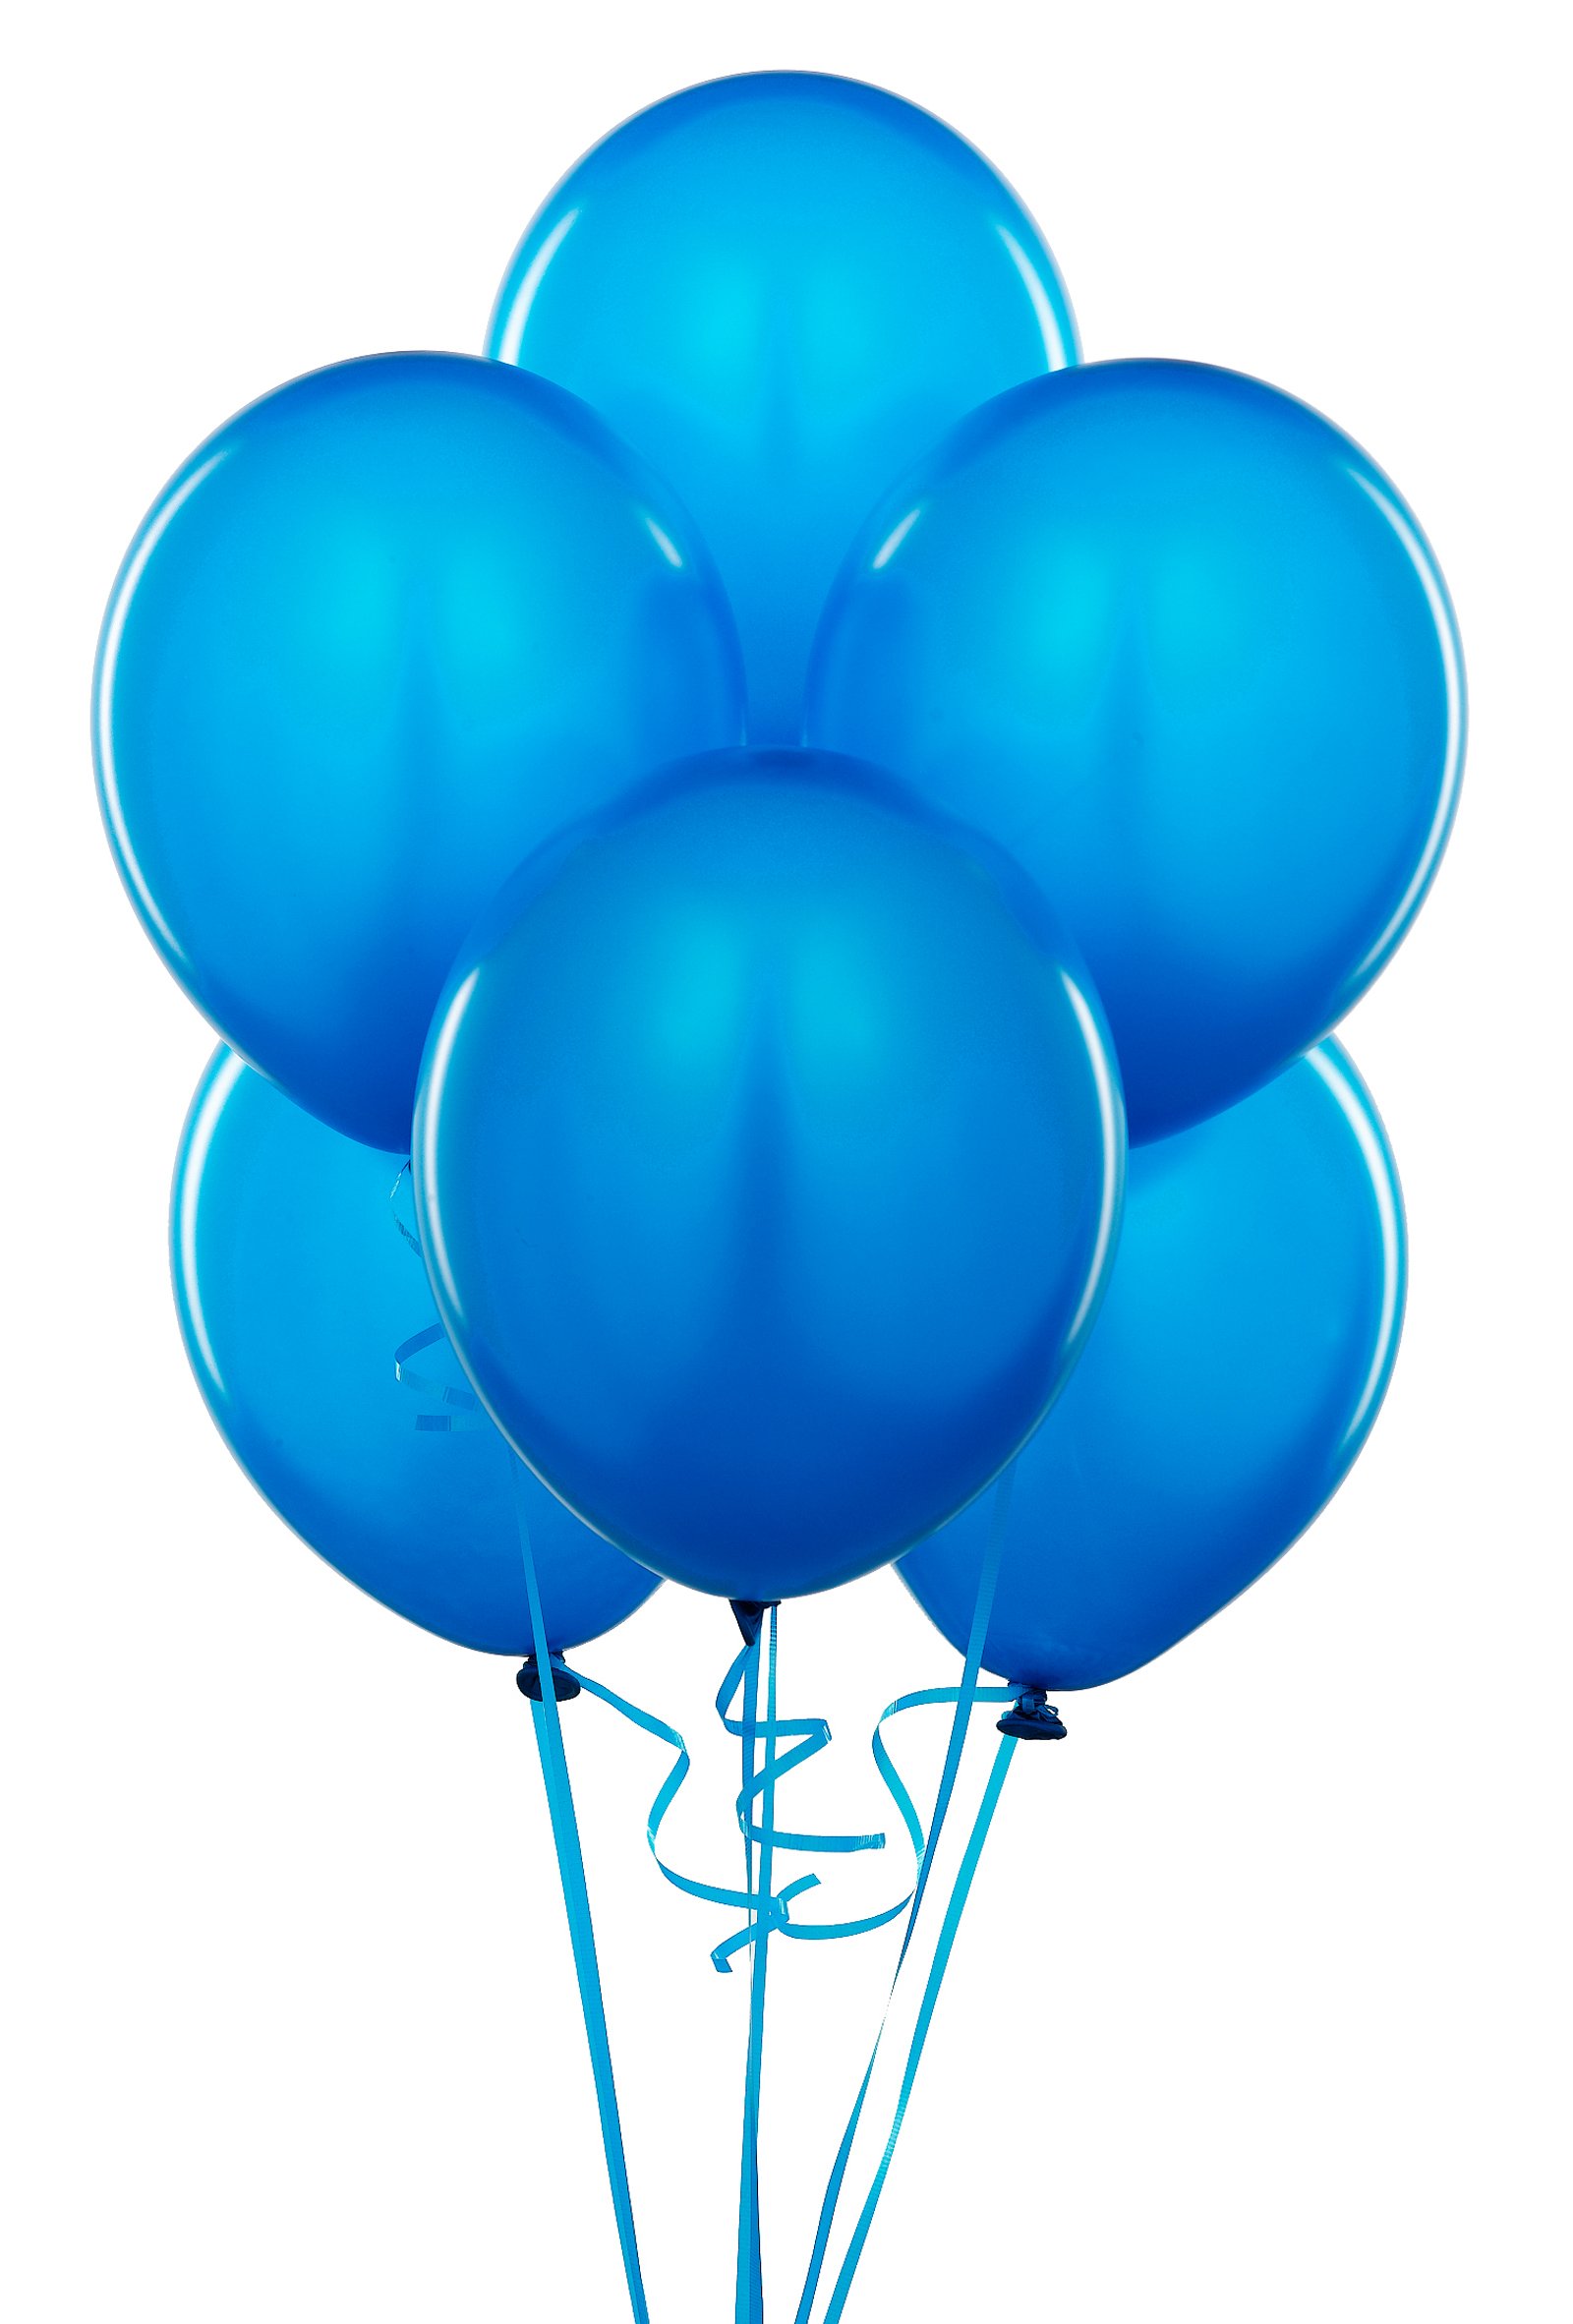 balloon seller clipart - photo #31